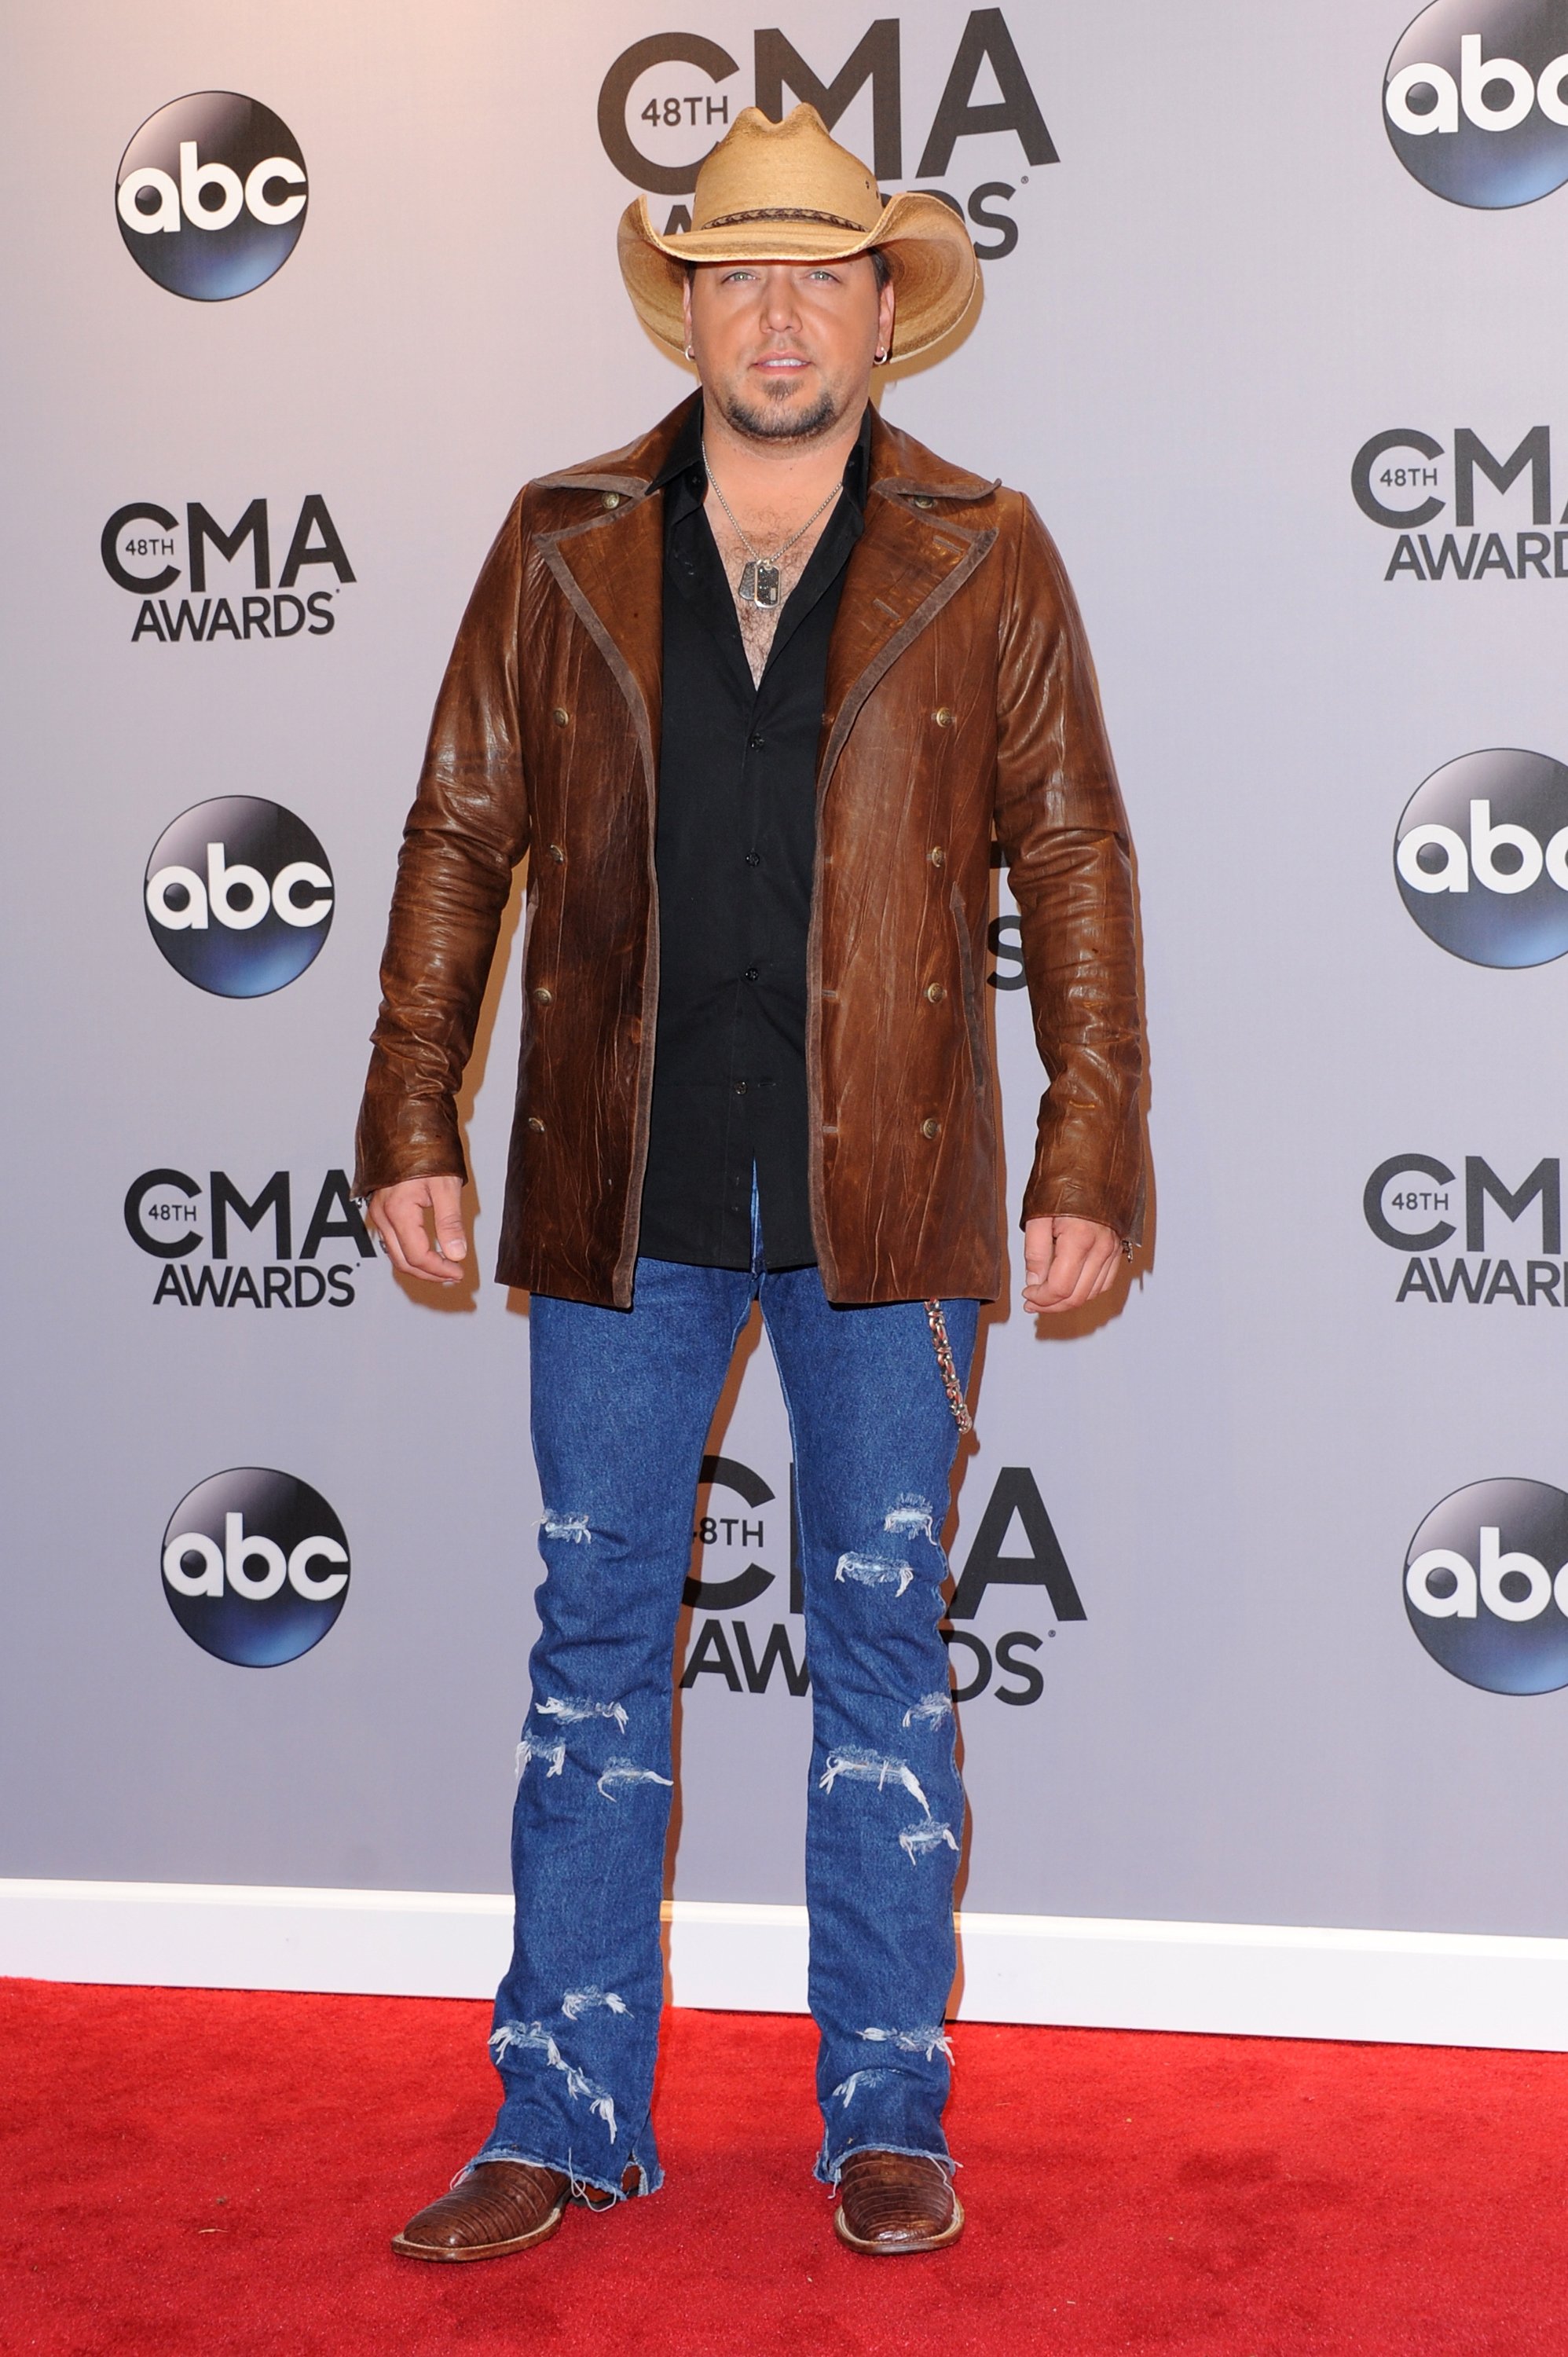 Jason Aldean attends the 48th annual CMA Awards at the Bridgestone Arena on November 5, 2014 in Nashville